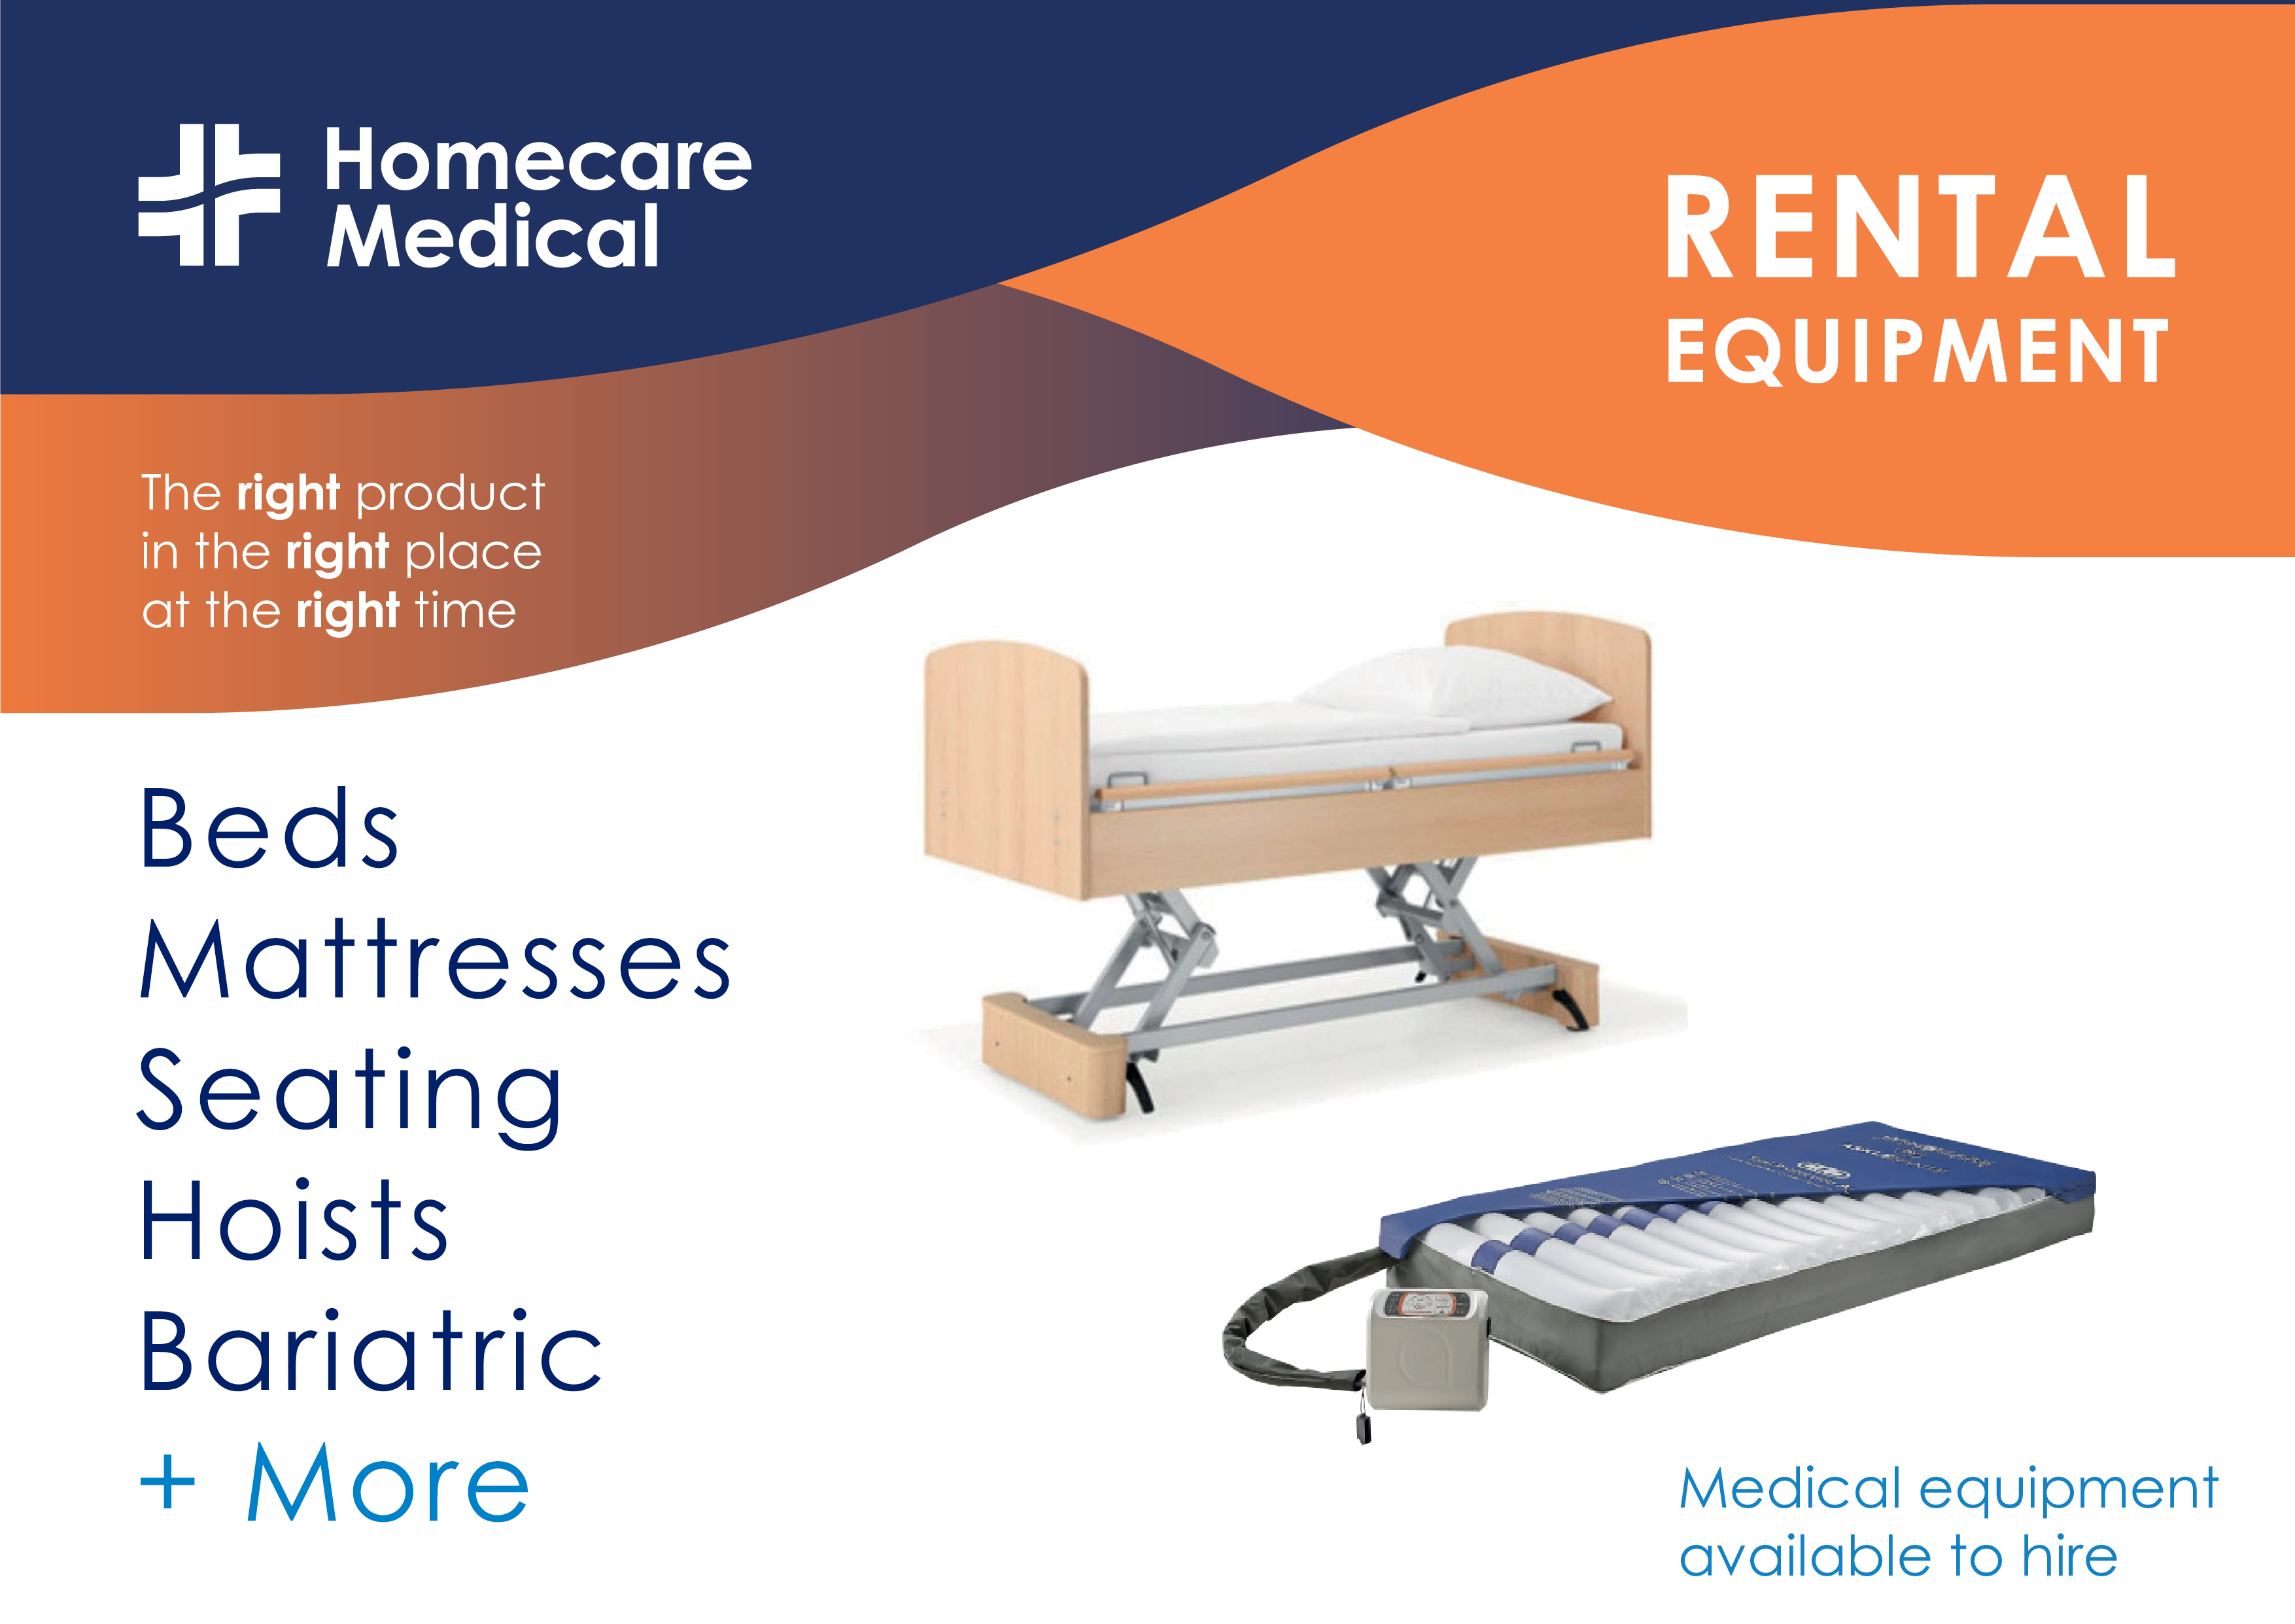 Homecare Medical's rental equipment